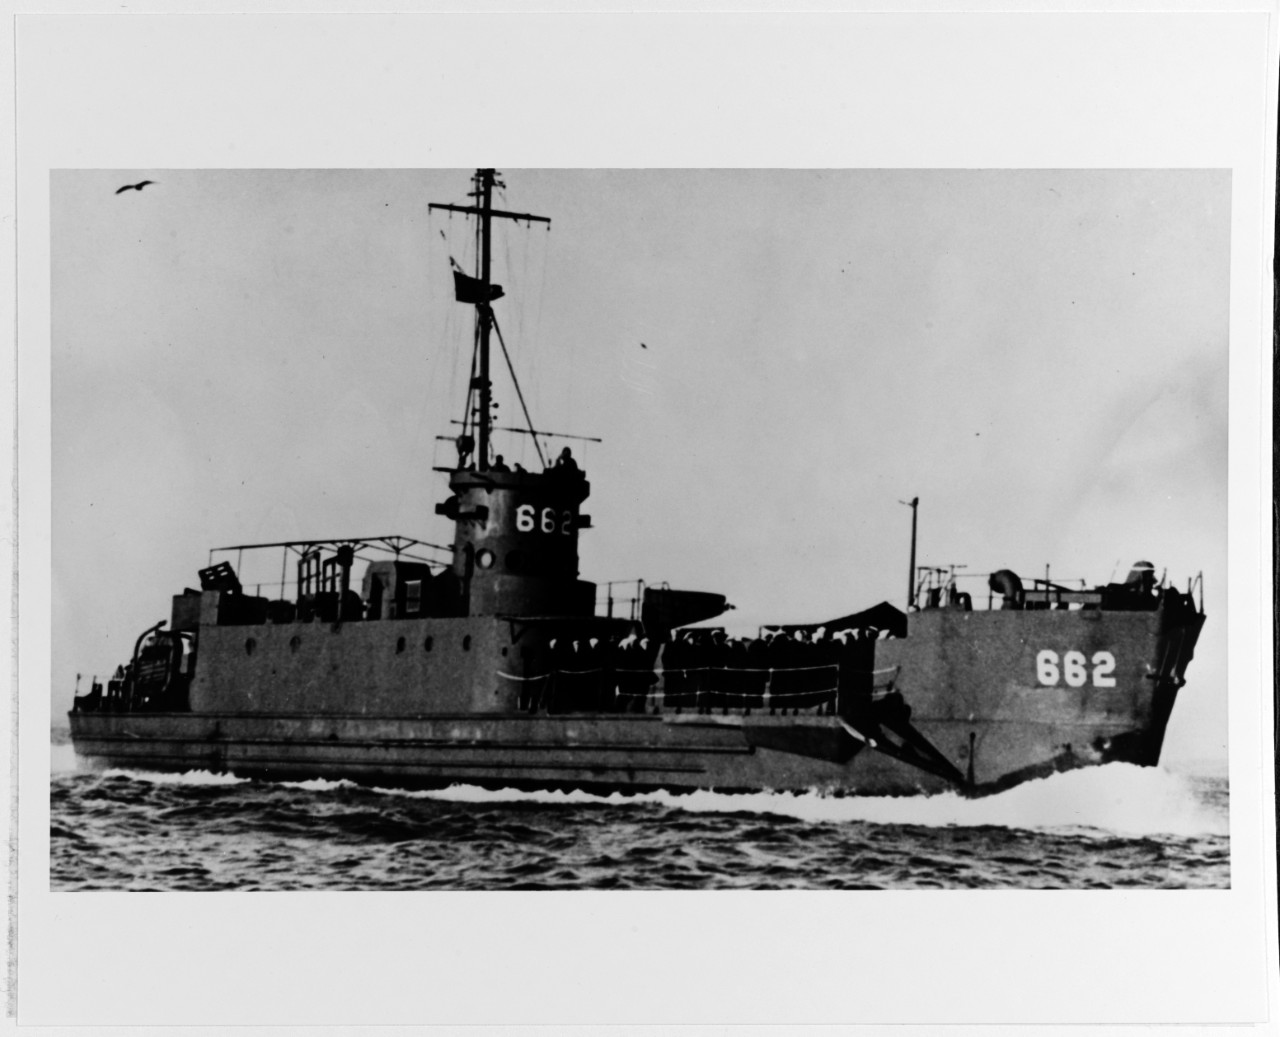 USS LCI-662